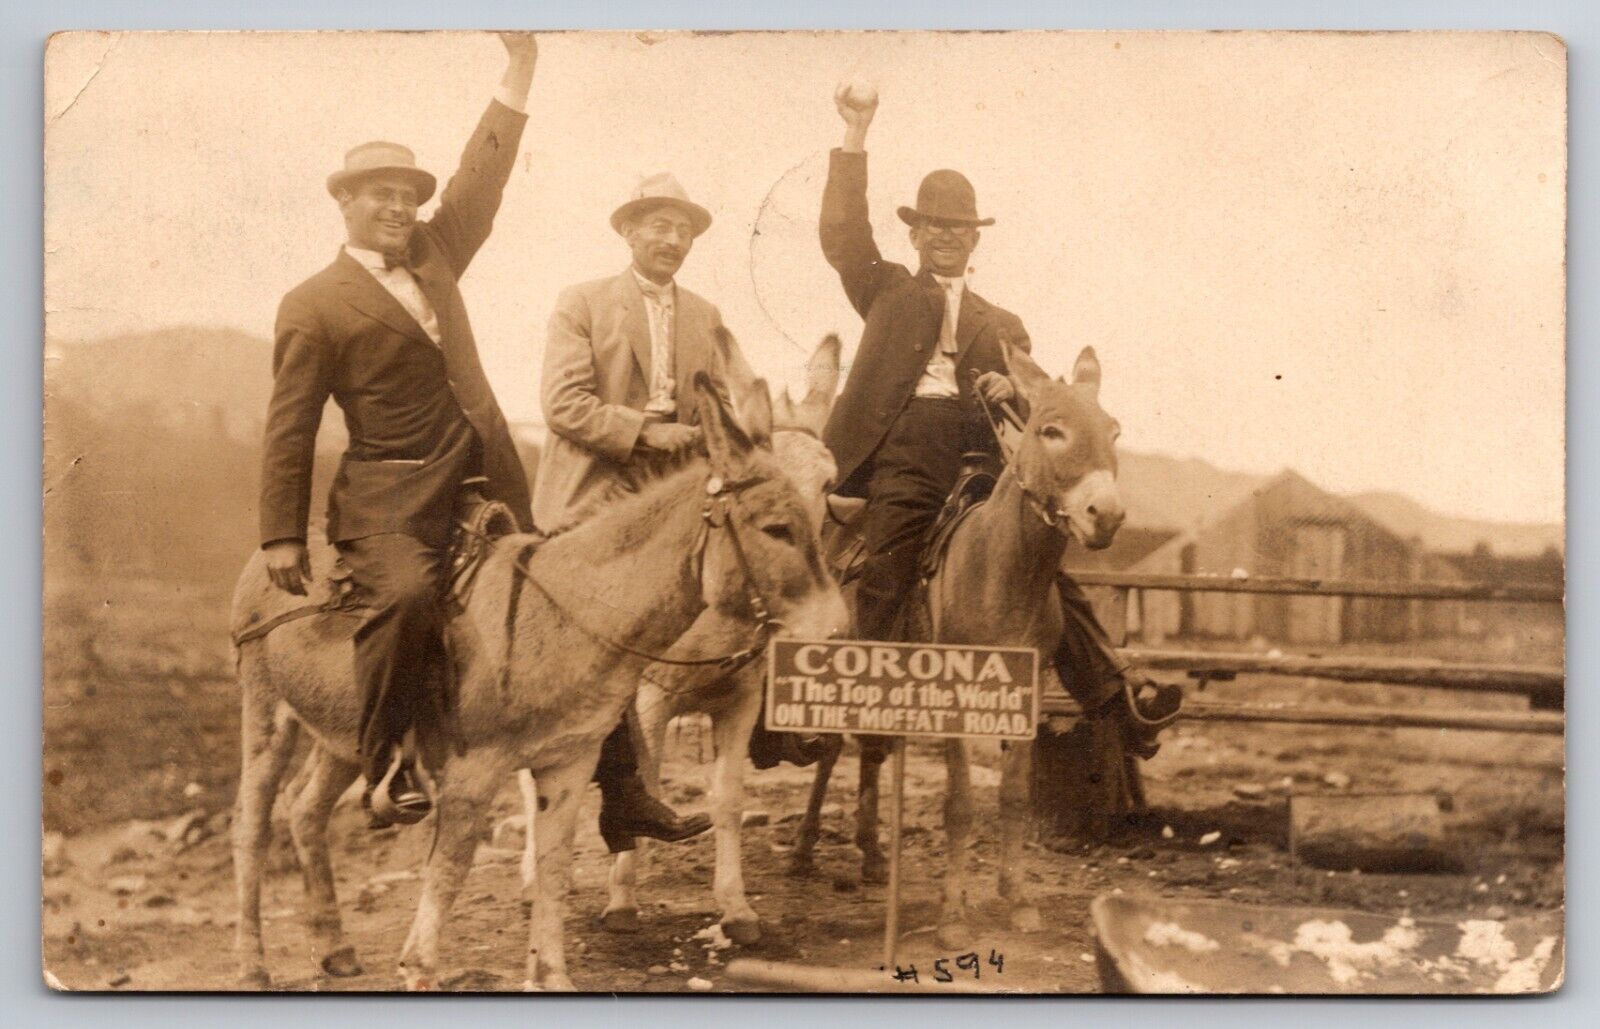 Corona On Top of the World Moffat Road Colorado 1911 Real Photo RPPC